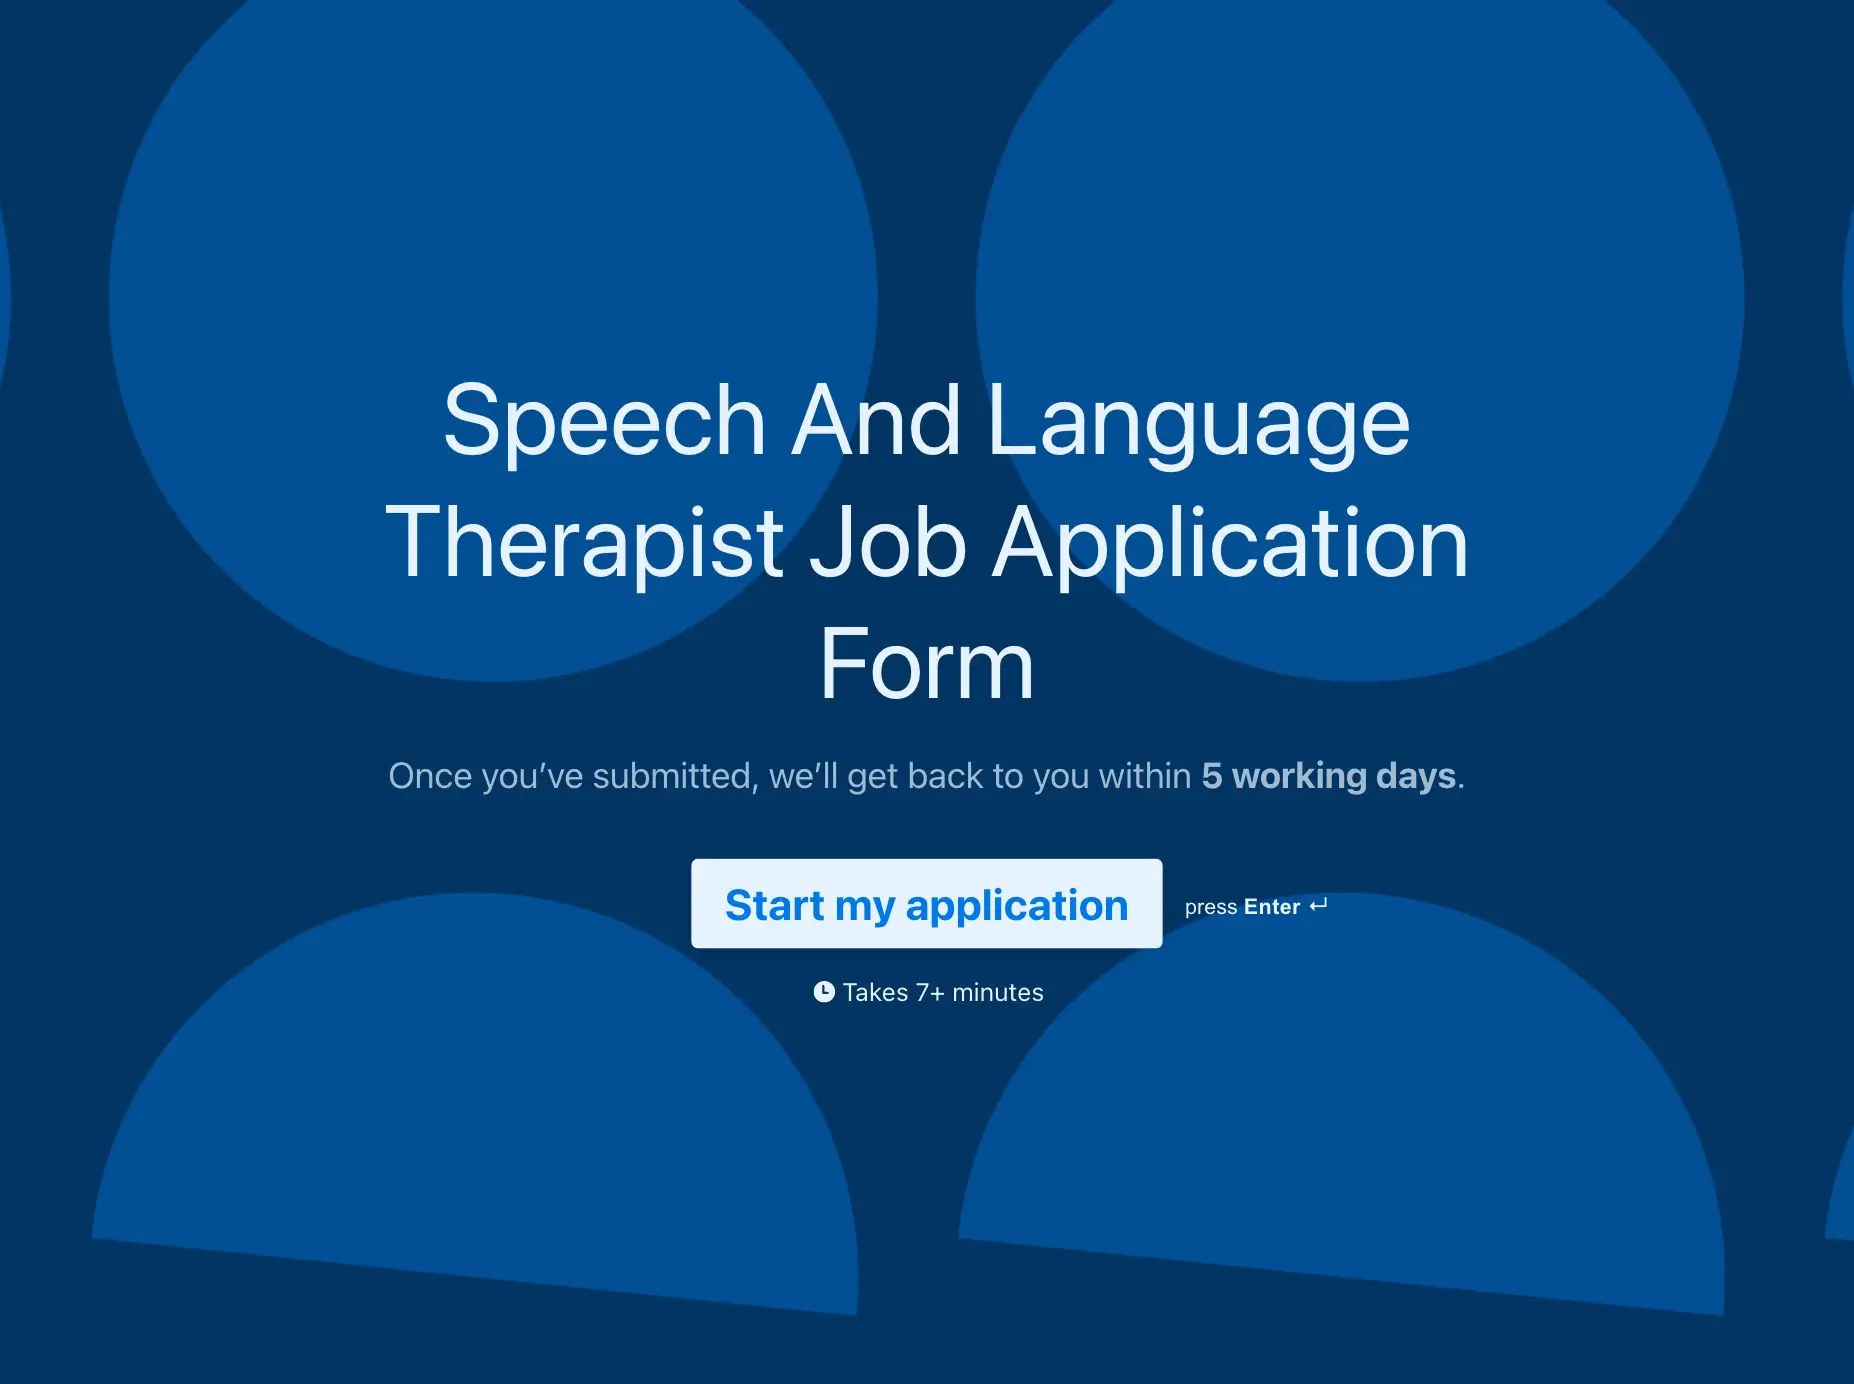 Speech And Language Therapist Job Application Form Template Hero